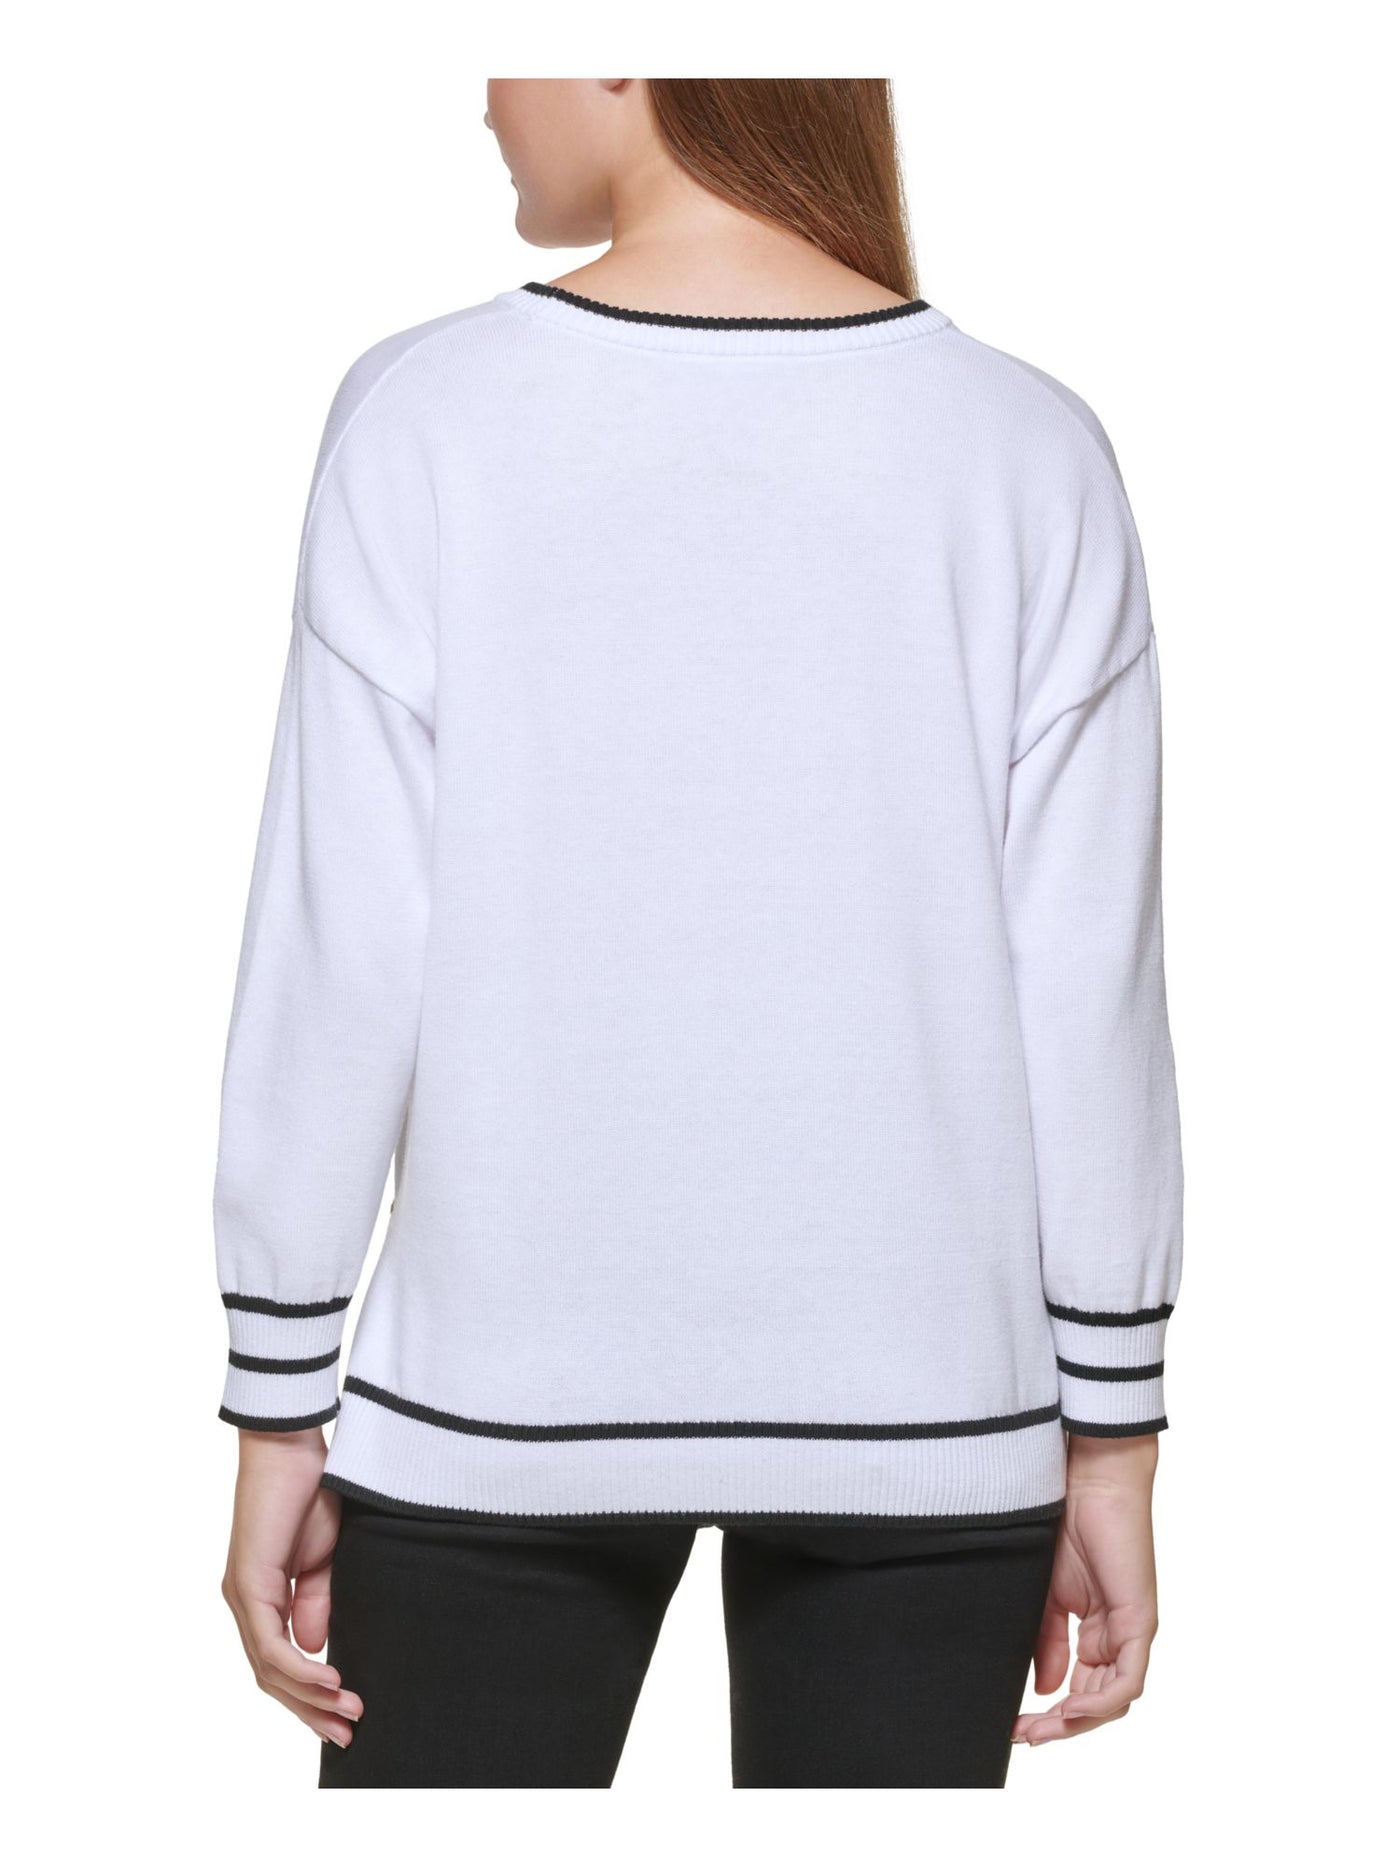 DKNY JEANS Womens White Long Sleeve Crew Neck Sweater XXS